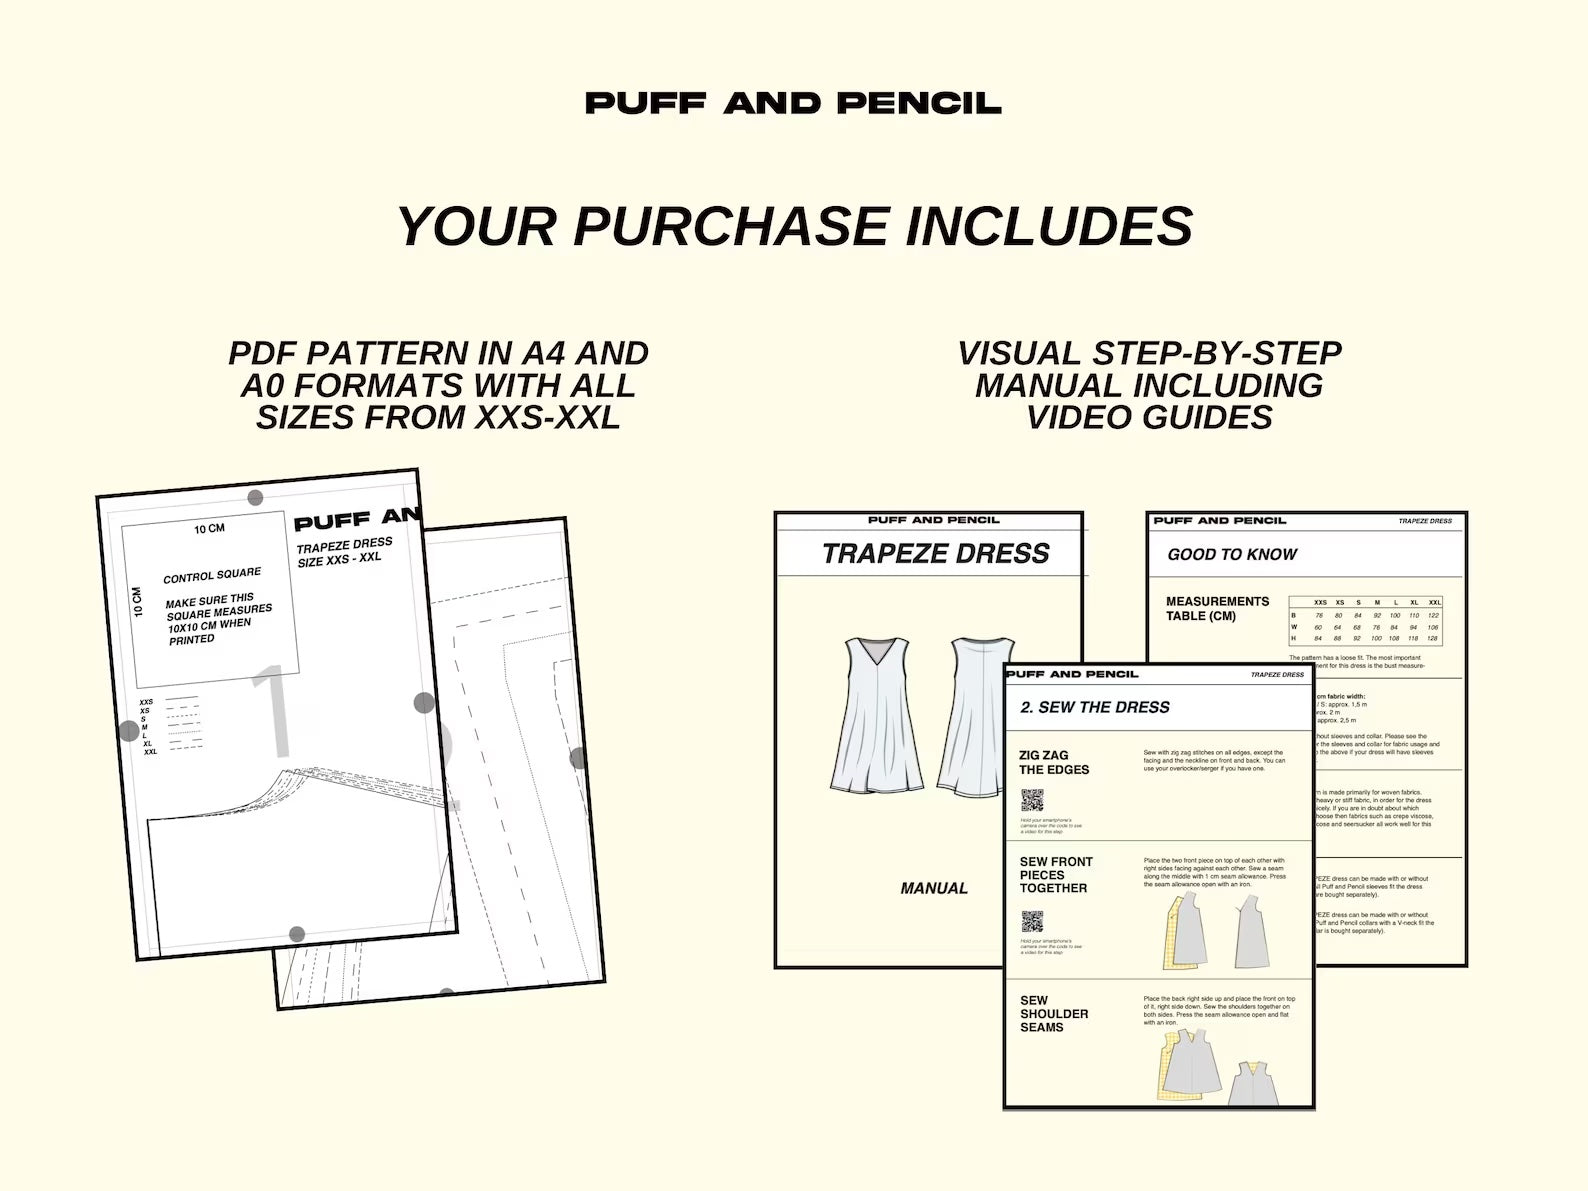 Puff and Pencil Luna Vest & Kite Sleeve